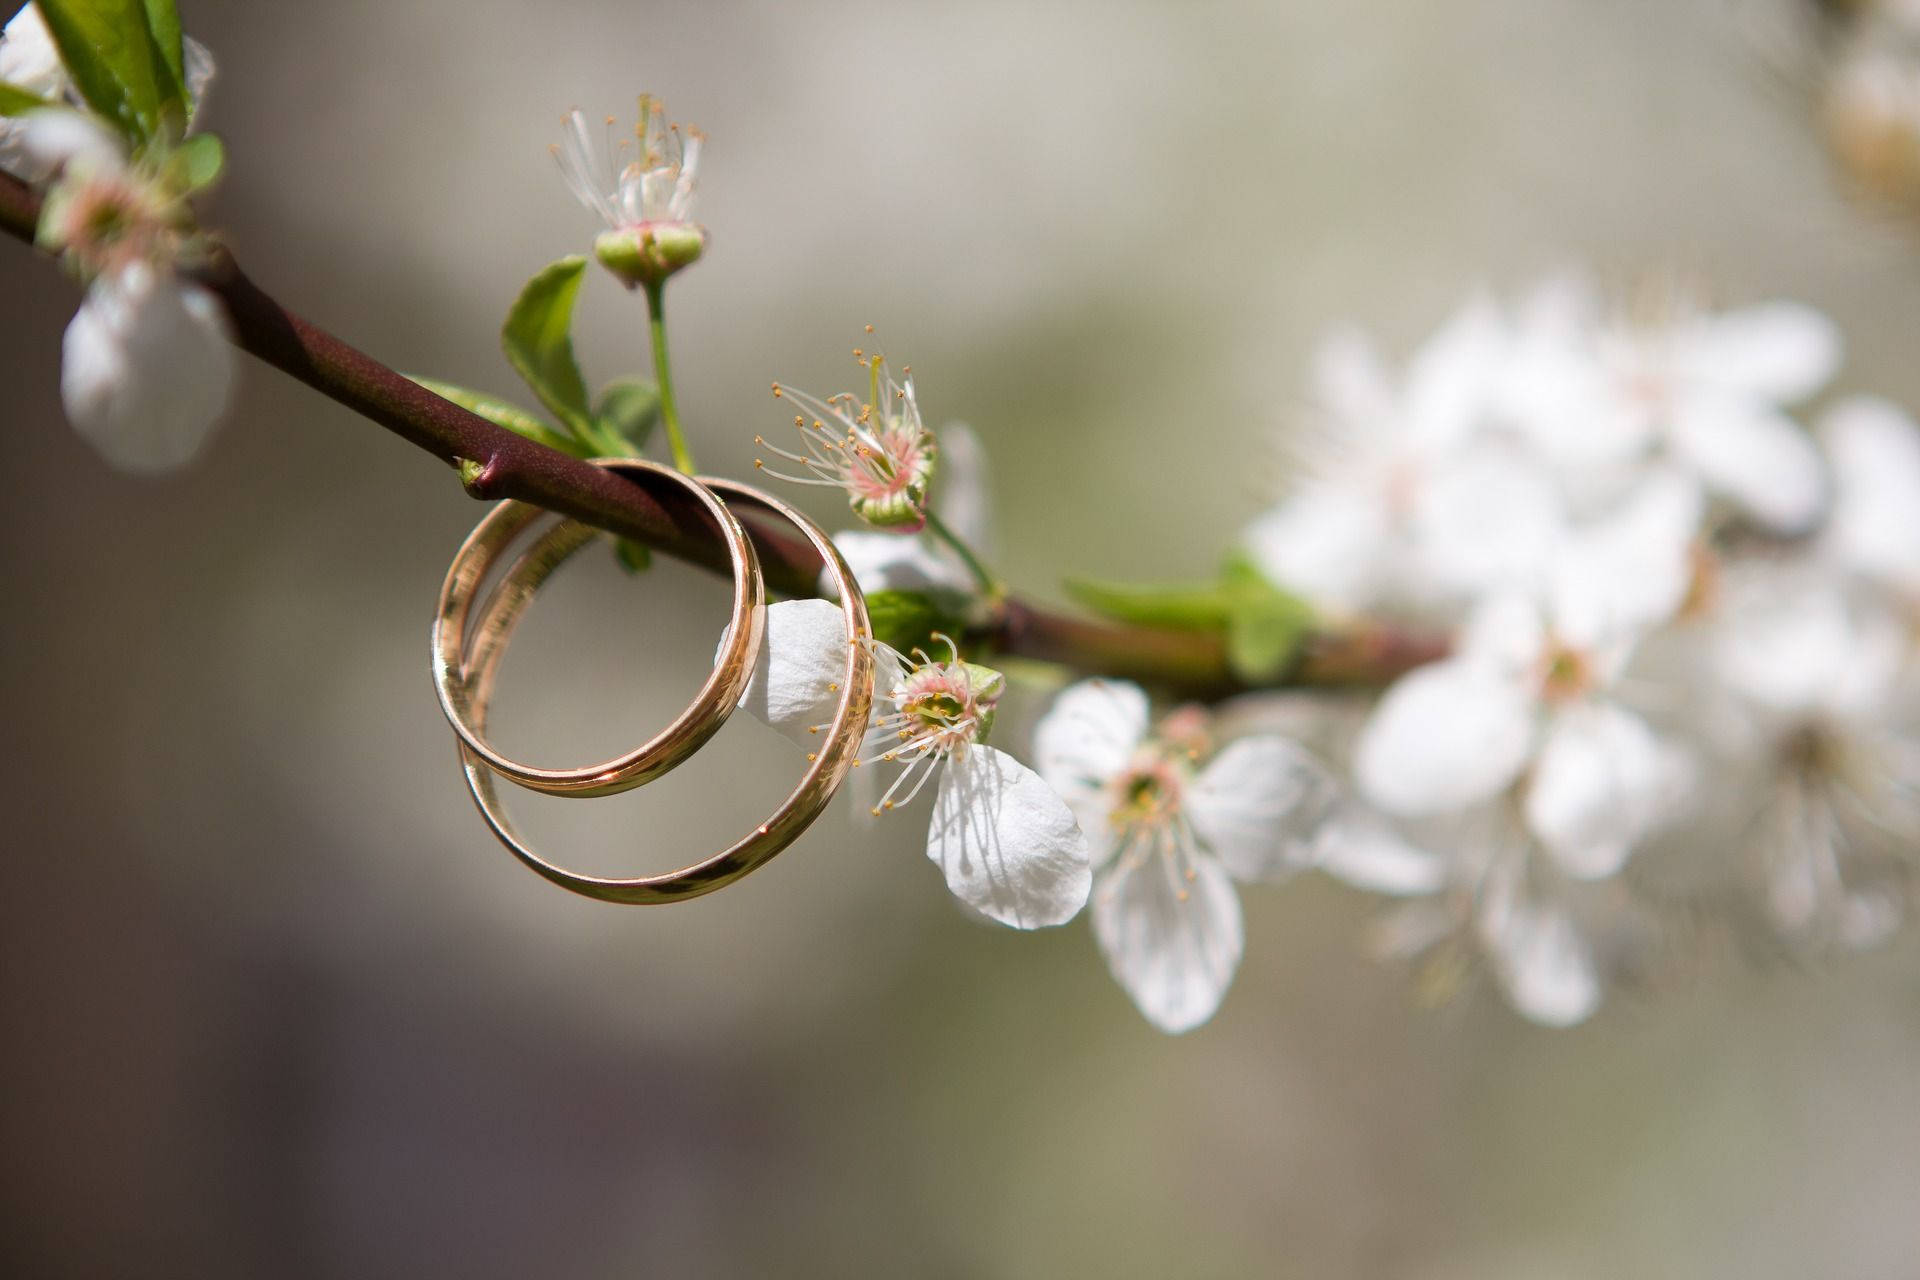 Caption: Romantic White Blossom Wedding Rings Background